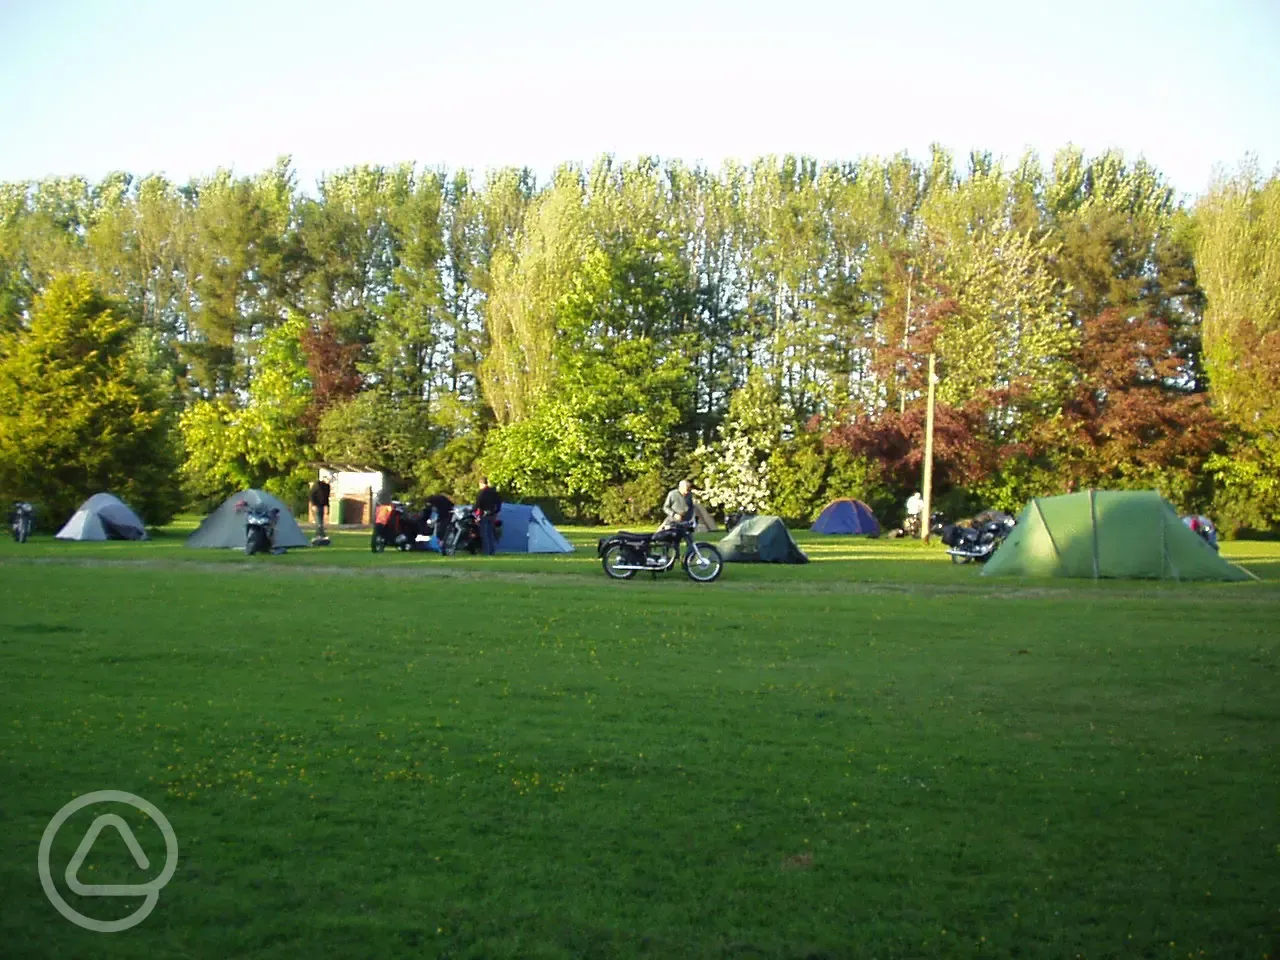 Aird Donald Caravan Park Stranraer. Camping area